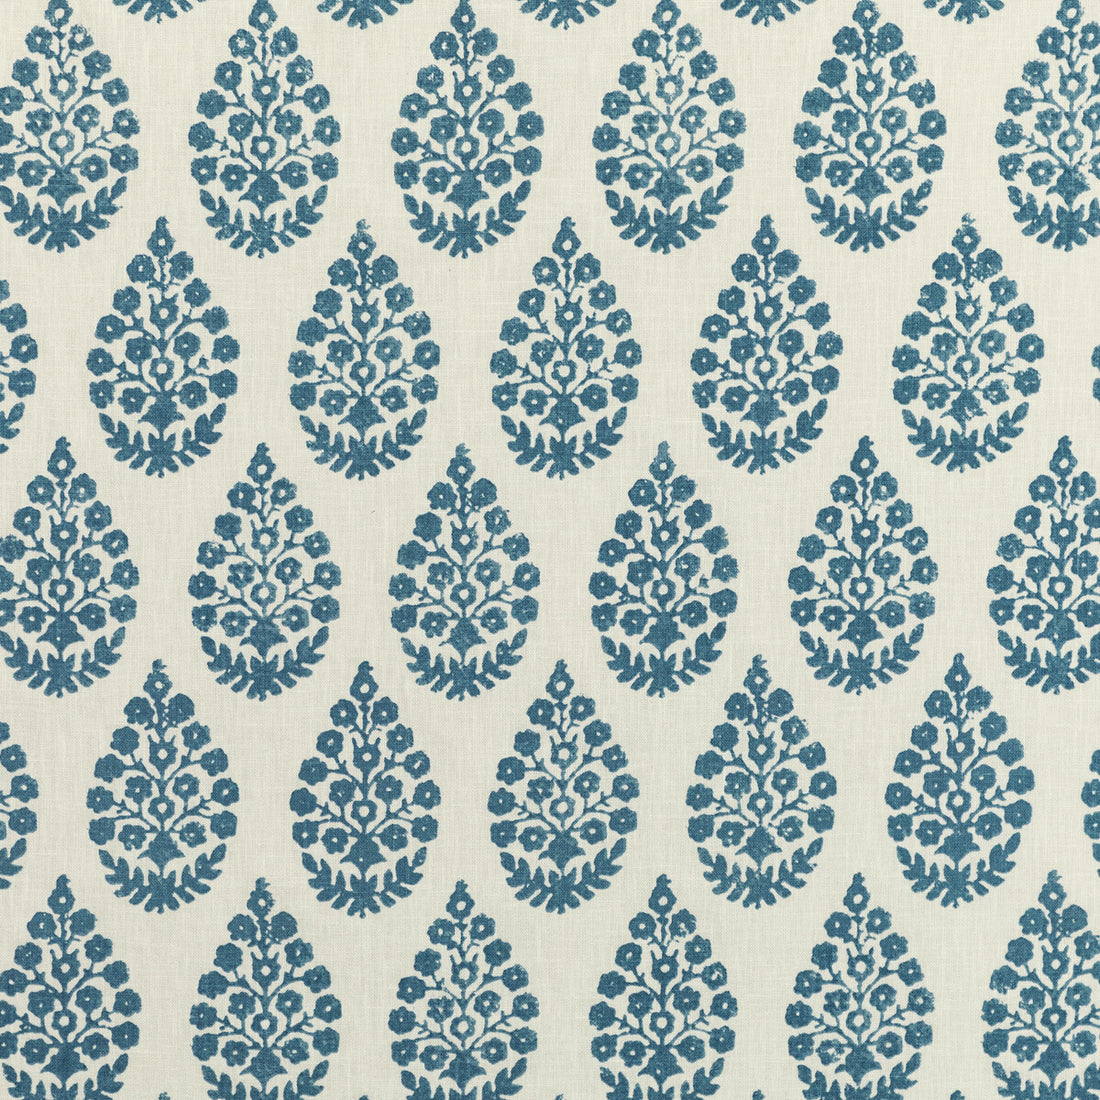 Kravet Basics fabric in tajpaisley-50 color - pattern TAJPAISLEY.50.0 - by Kravet Basics in the L&